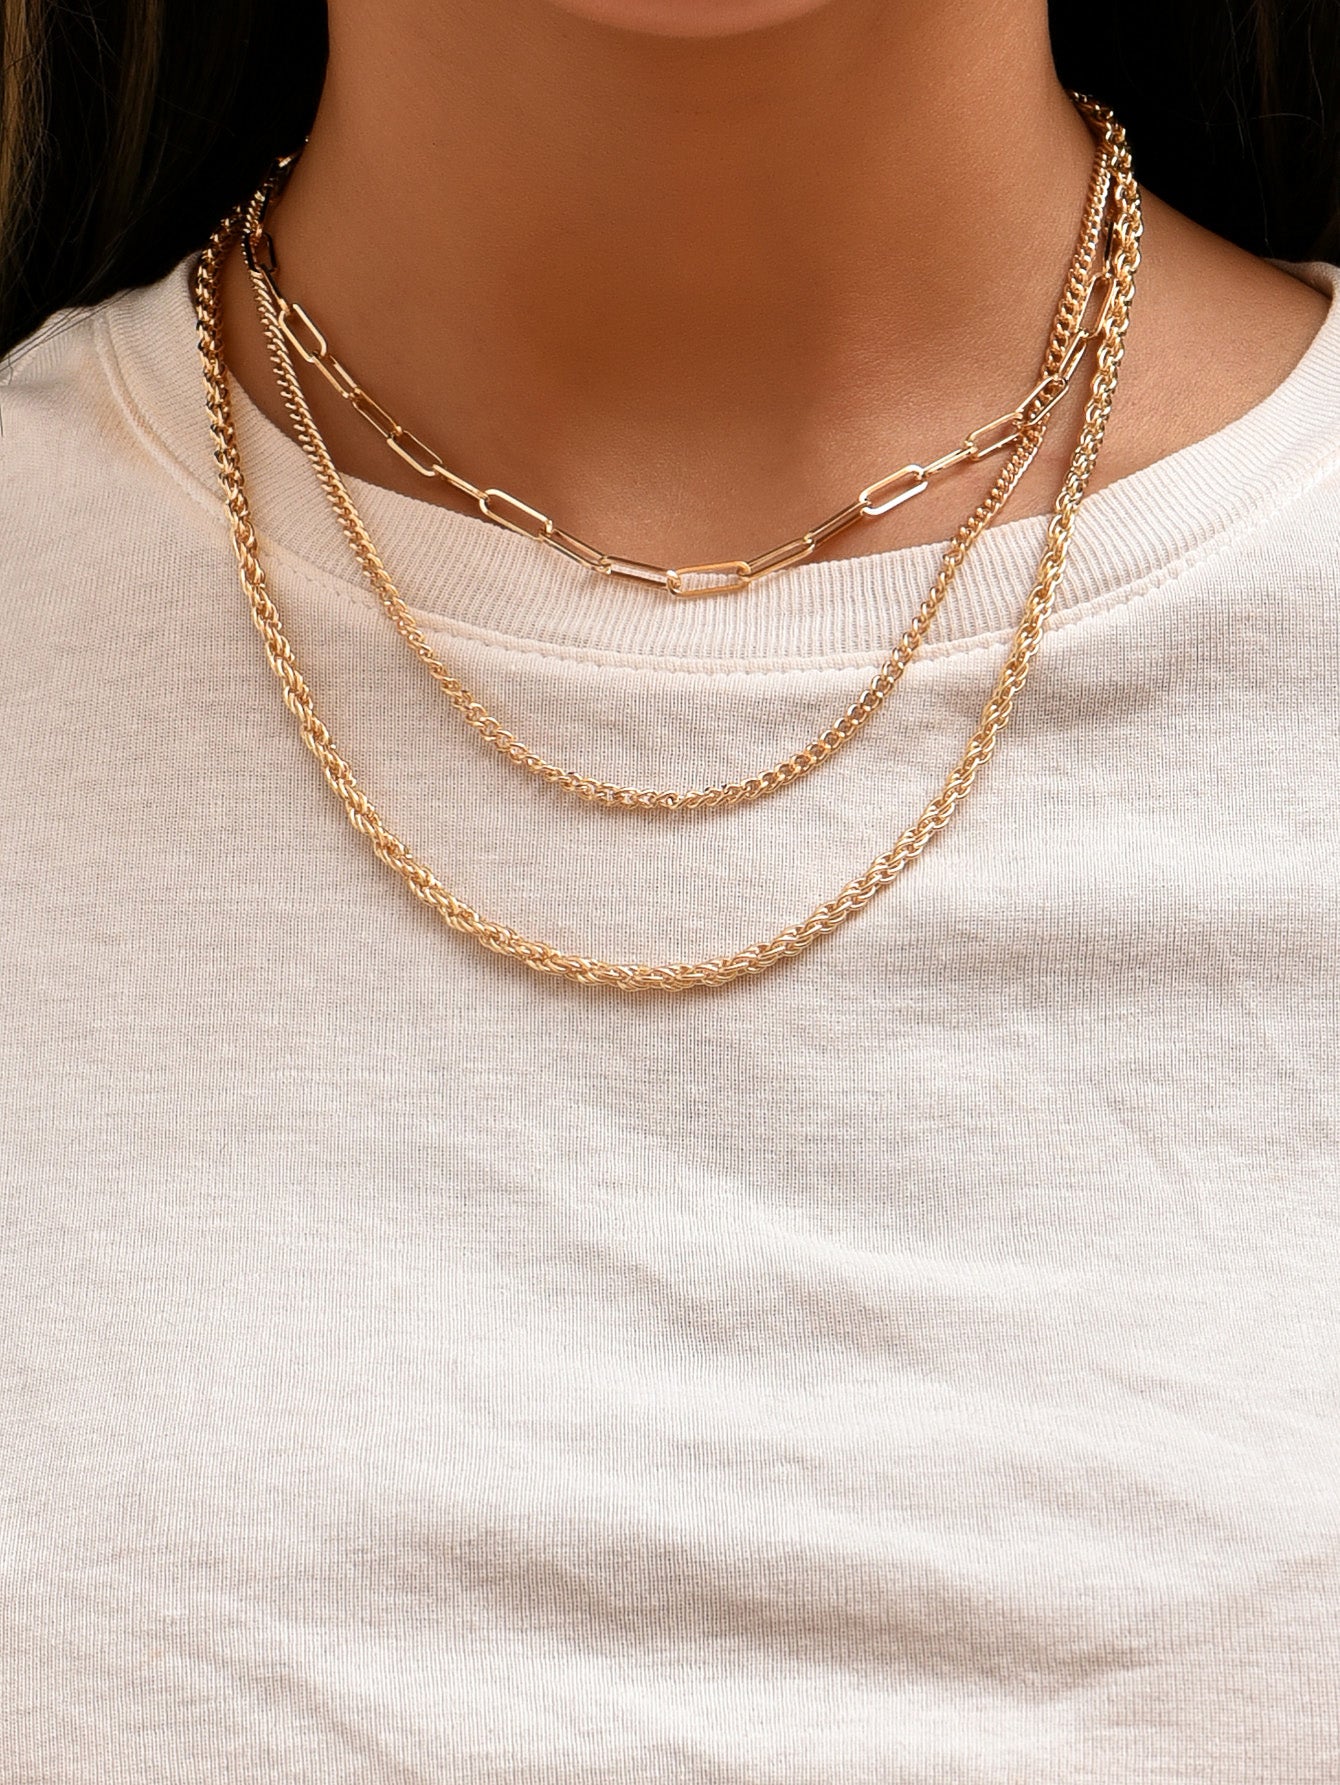 Three Type Layered Chain Necklace